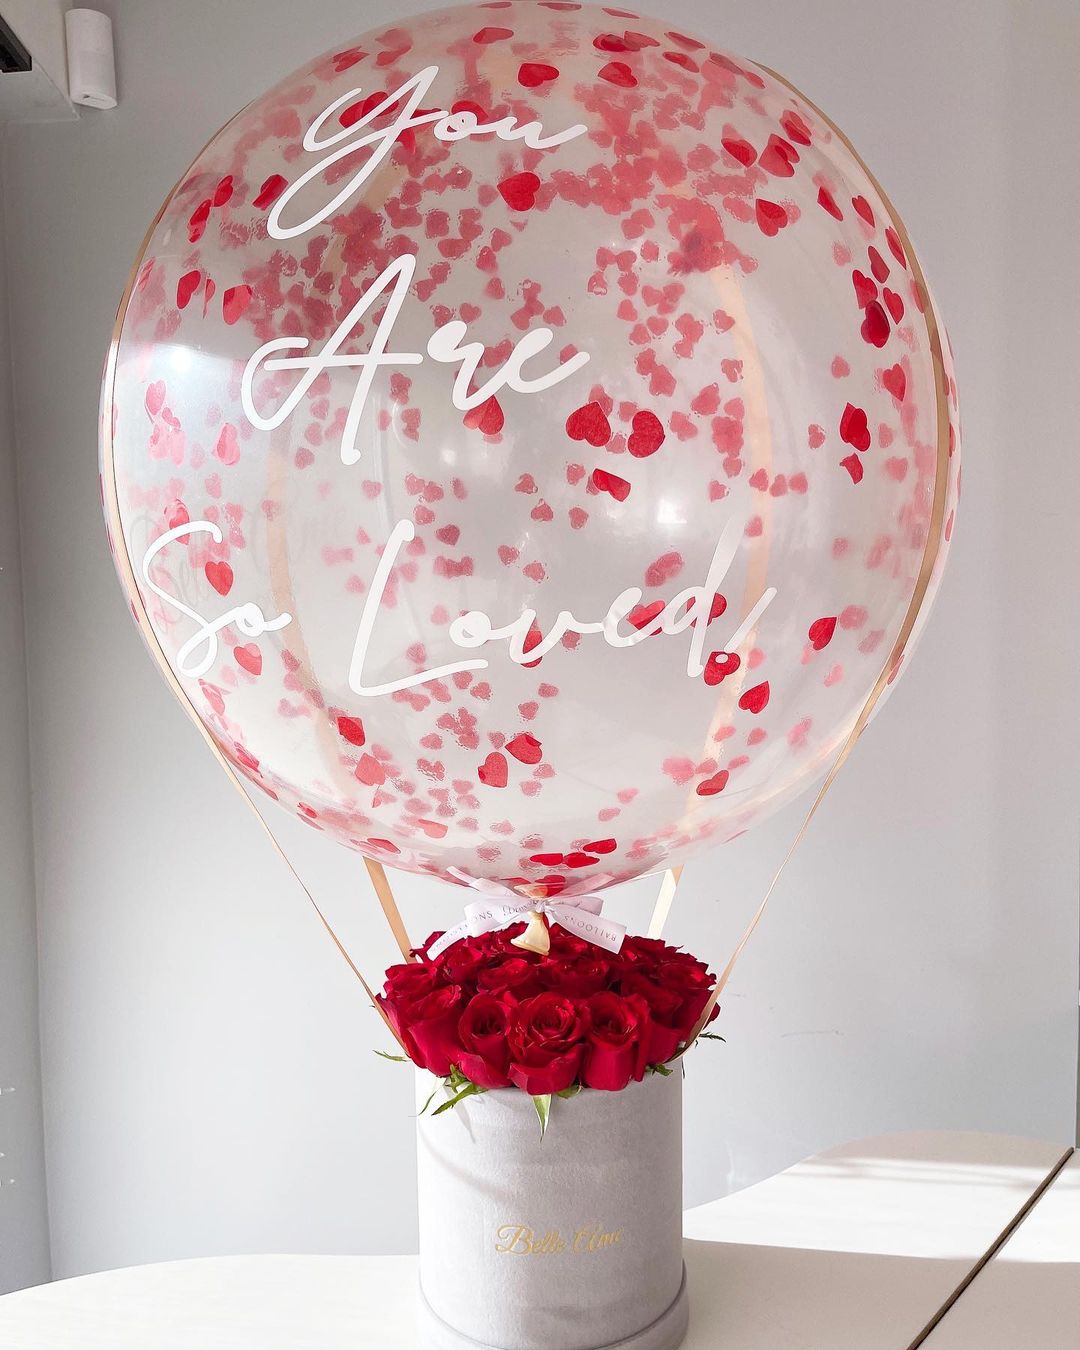 Blush Hot Air Balloon with roses